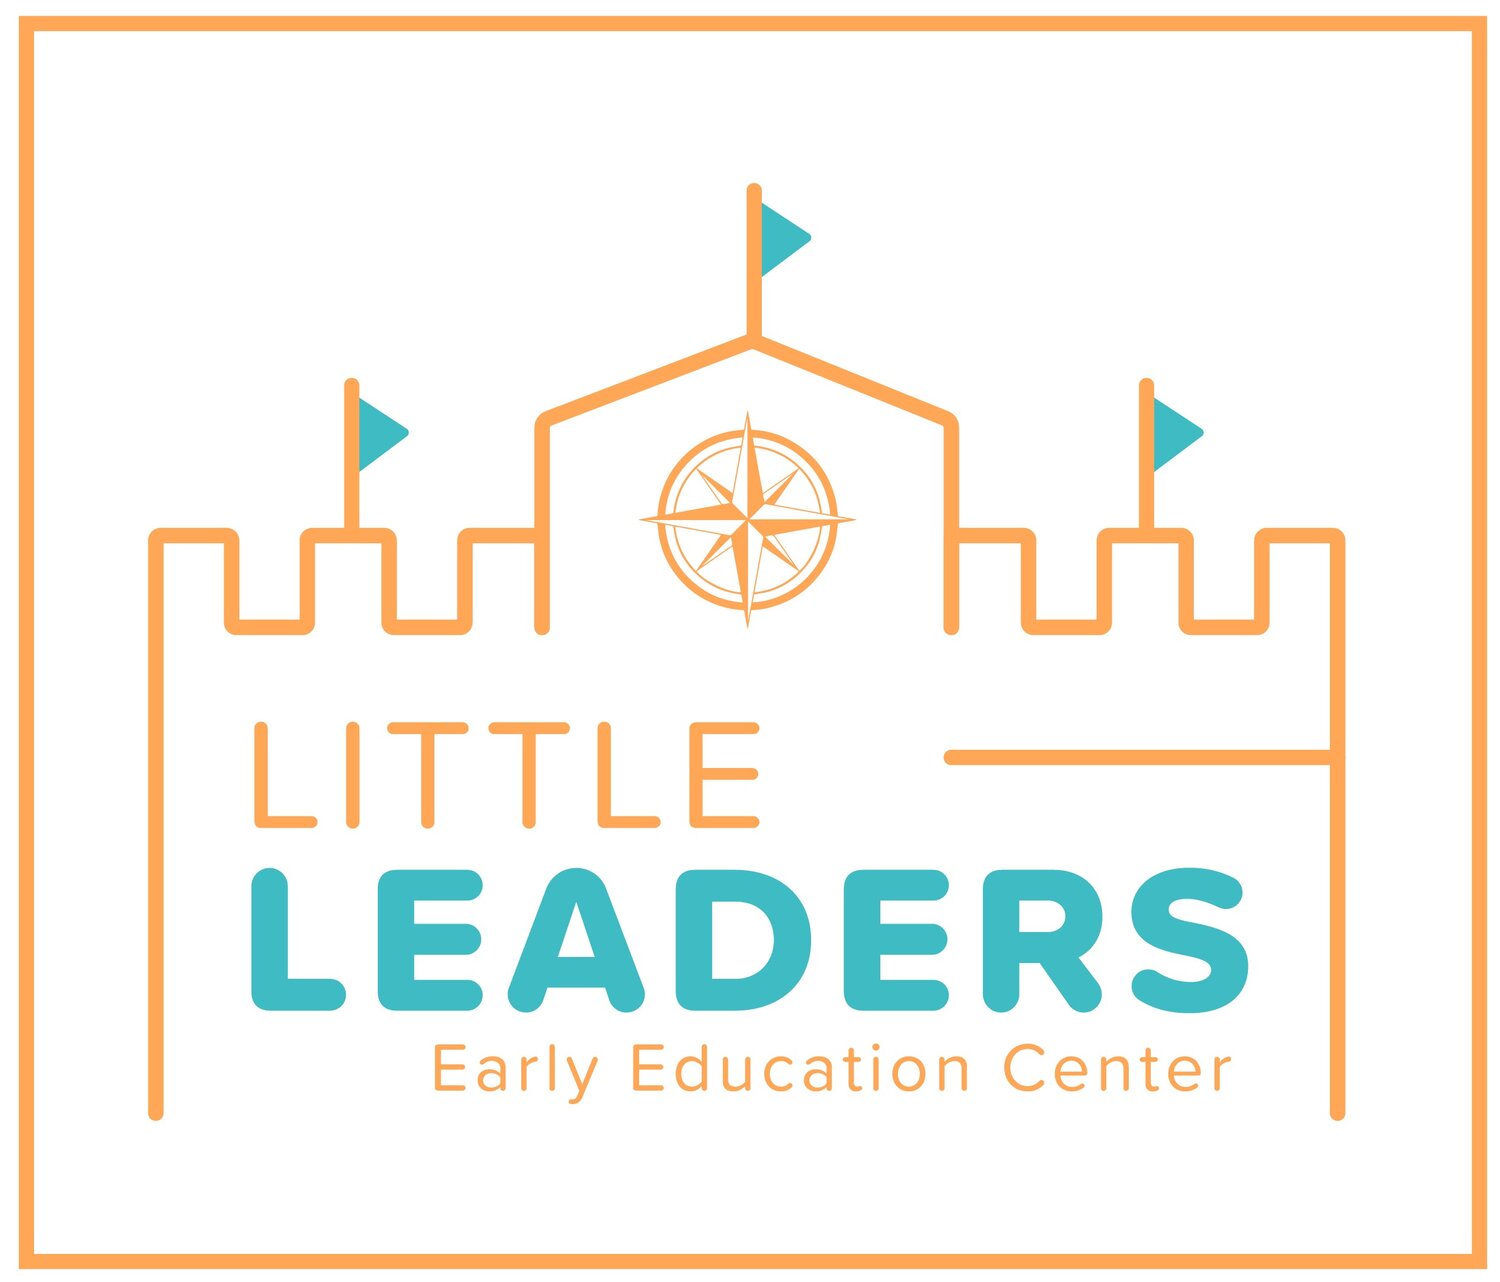 Little Leaders Early Education Center, LLC.